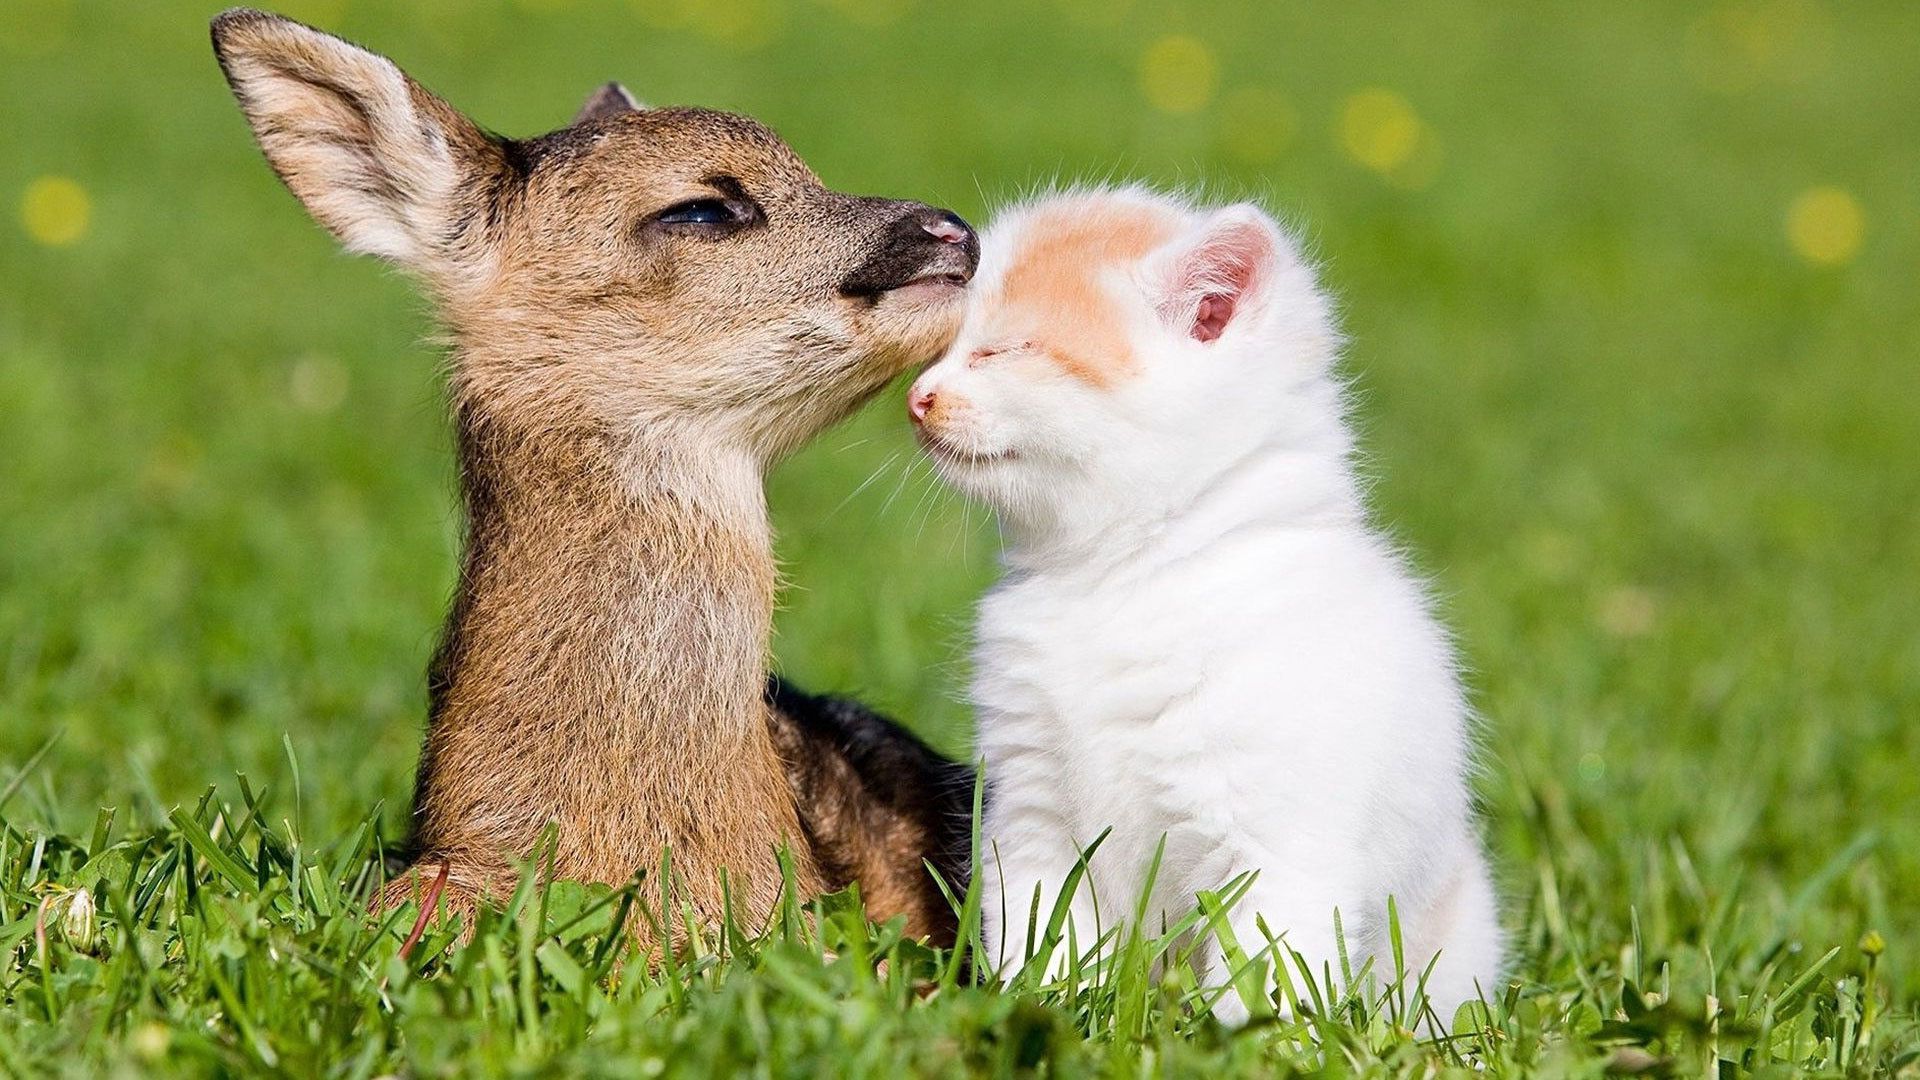 Baby deer vs kitten